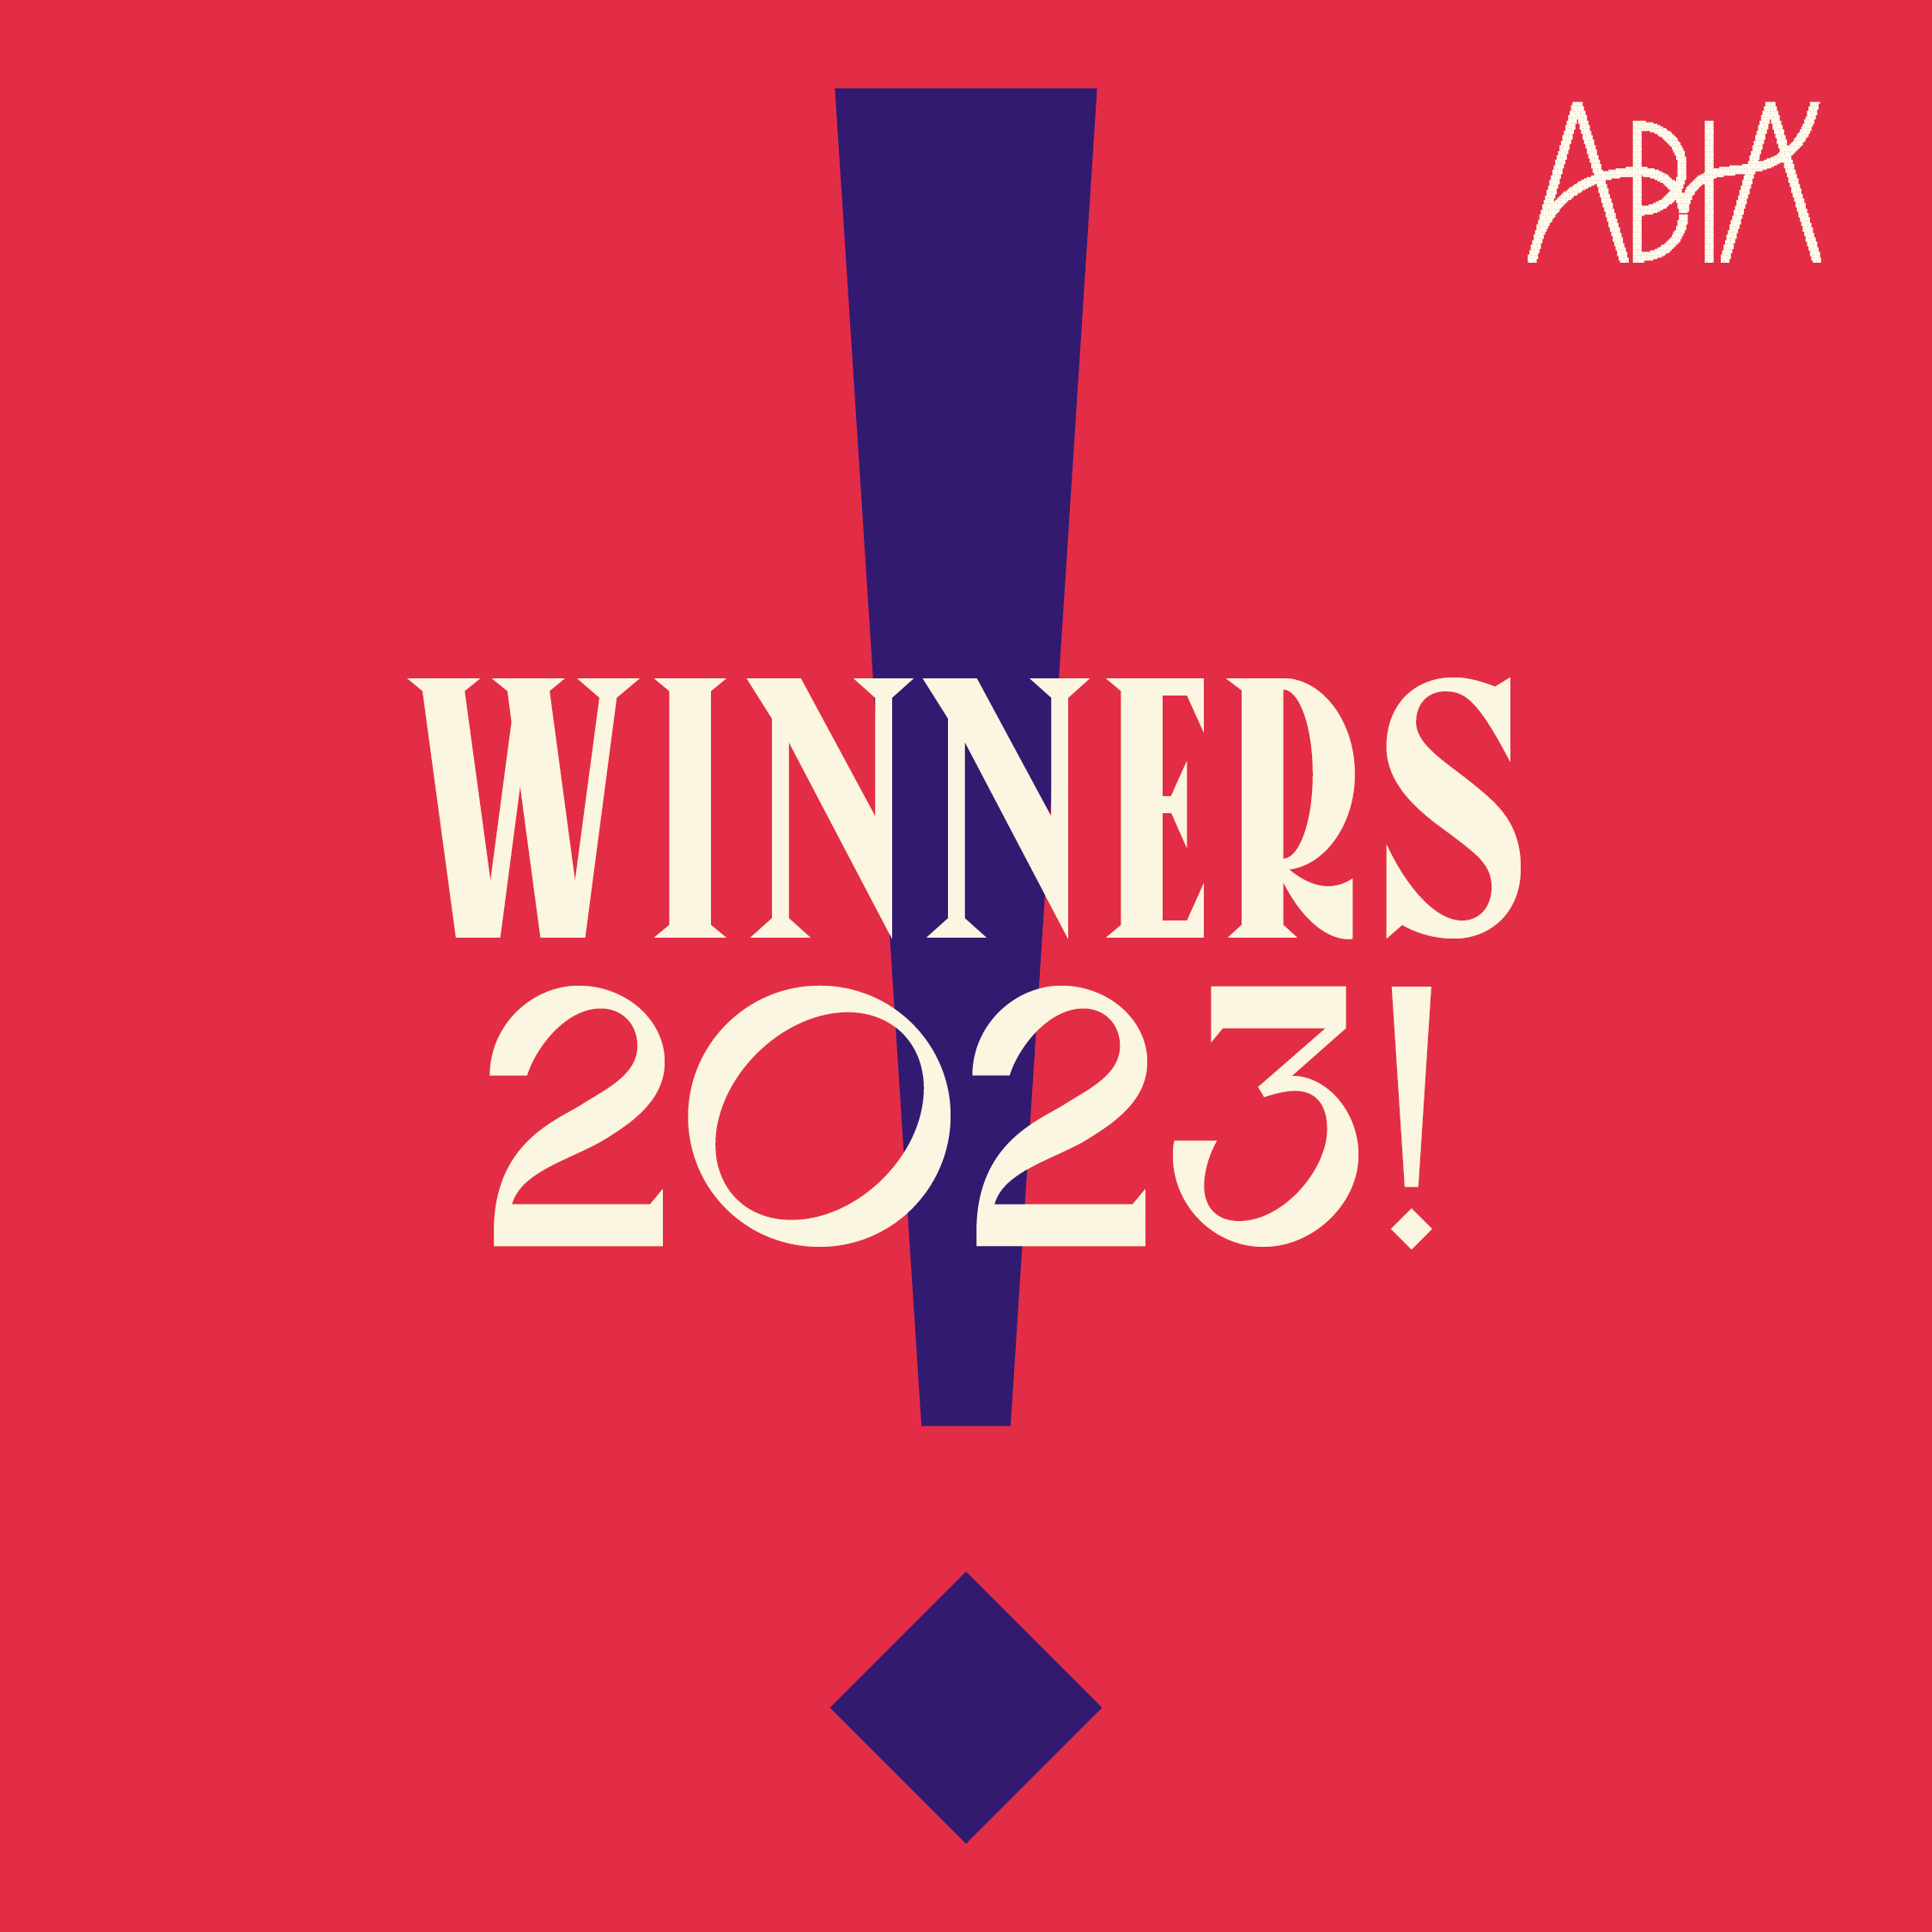 ABIA Winner graphic